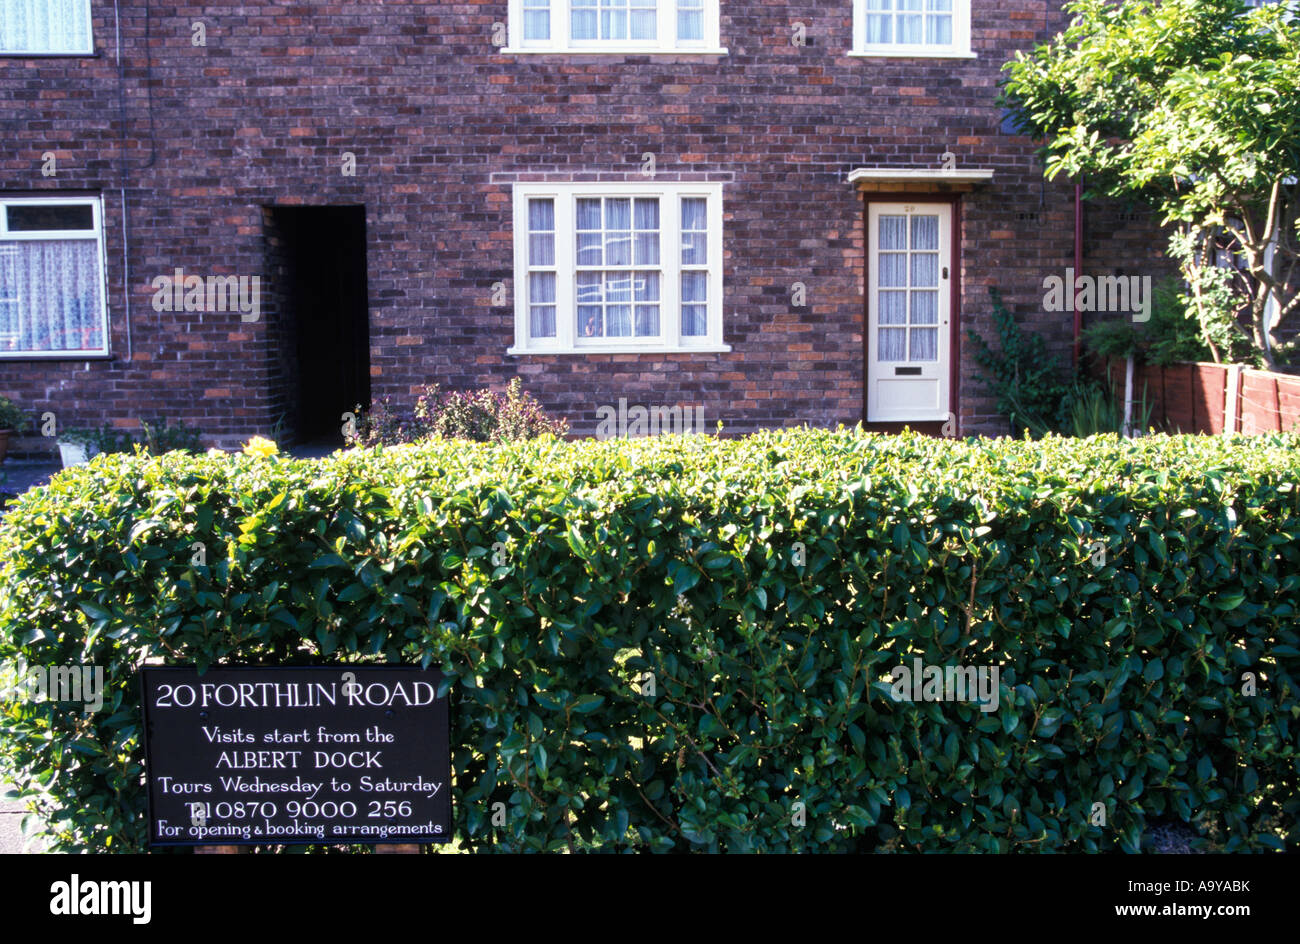 20 Forthlin Road, boyhood home of Paul McCartney in Liverpool, UK Stock Photo